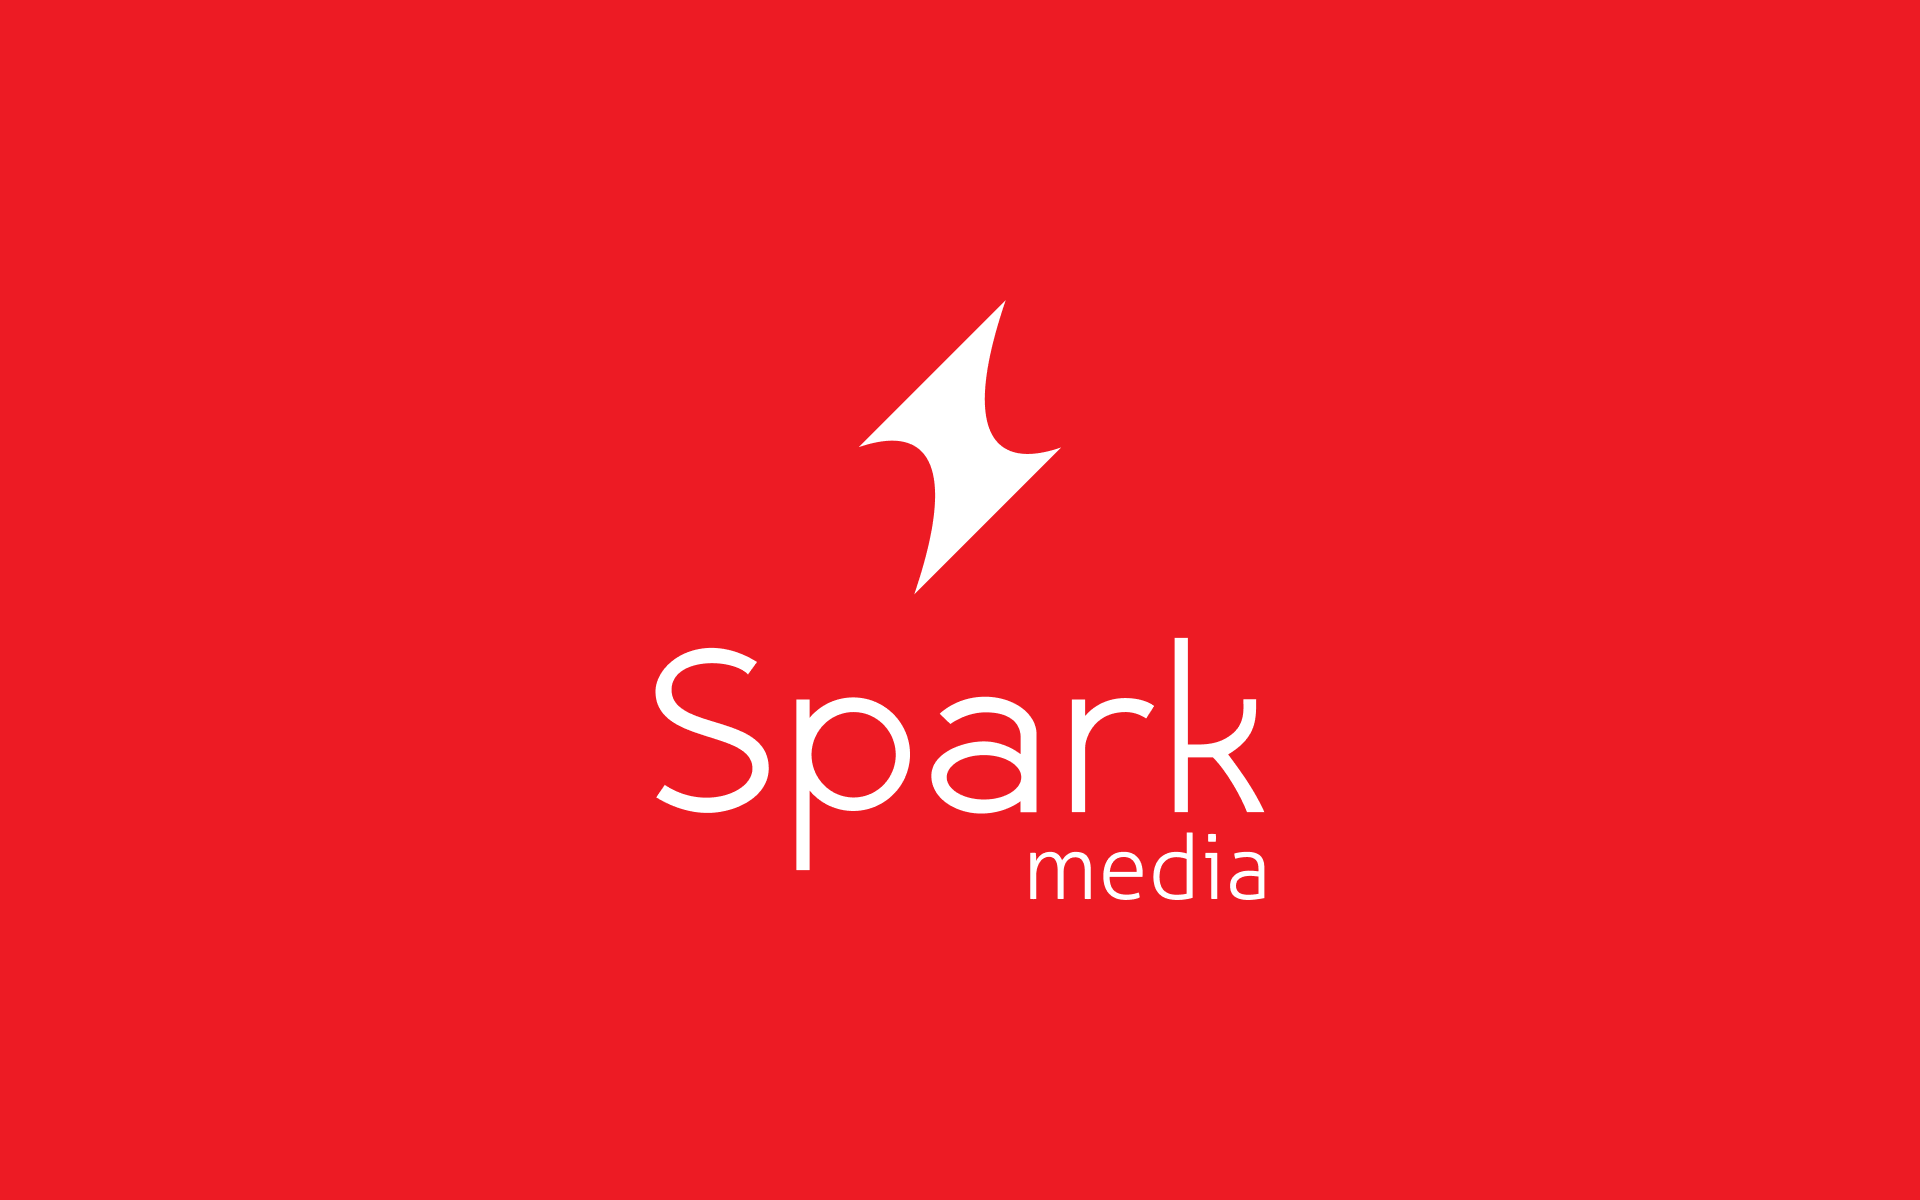 Spark's logo.